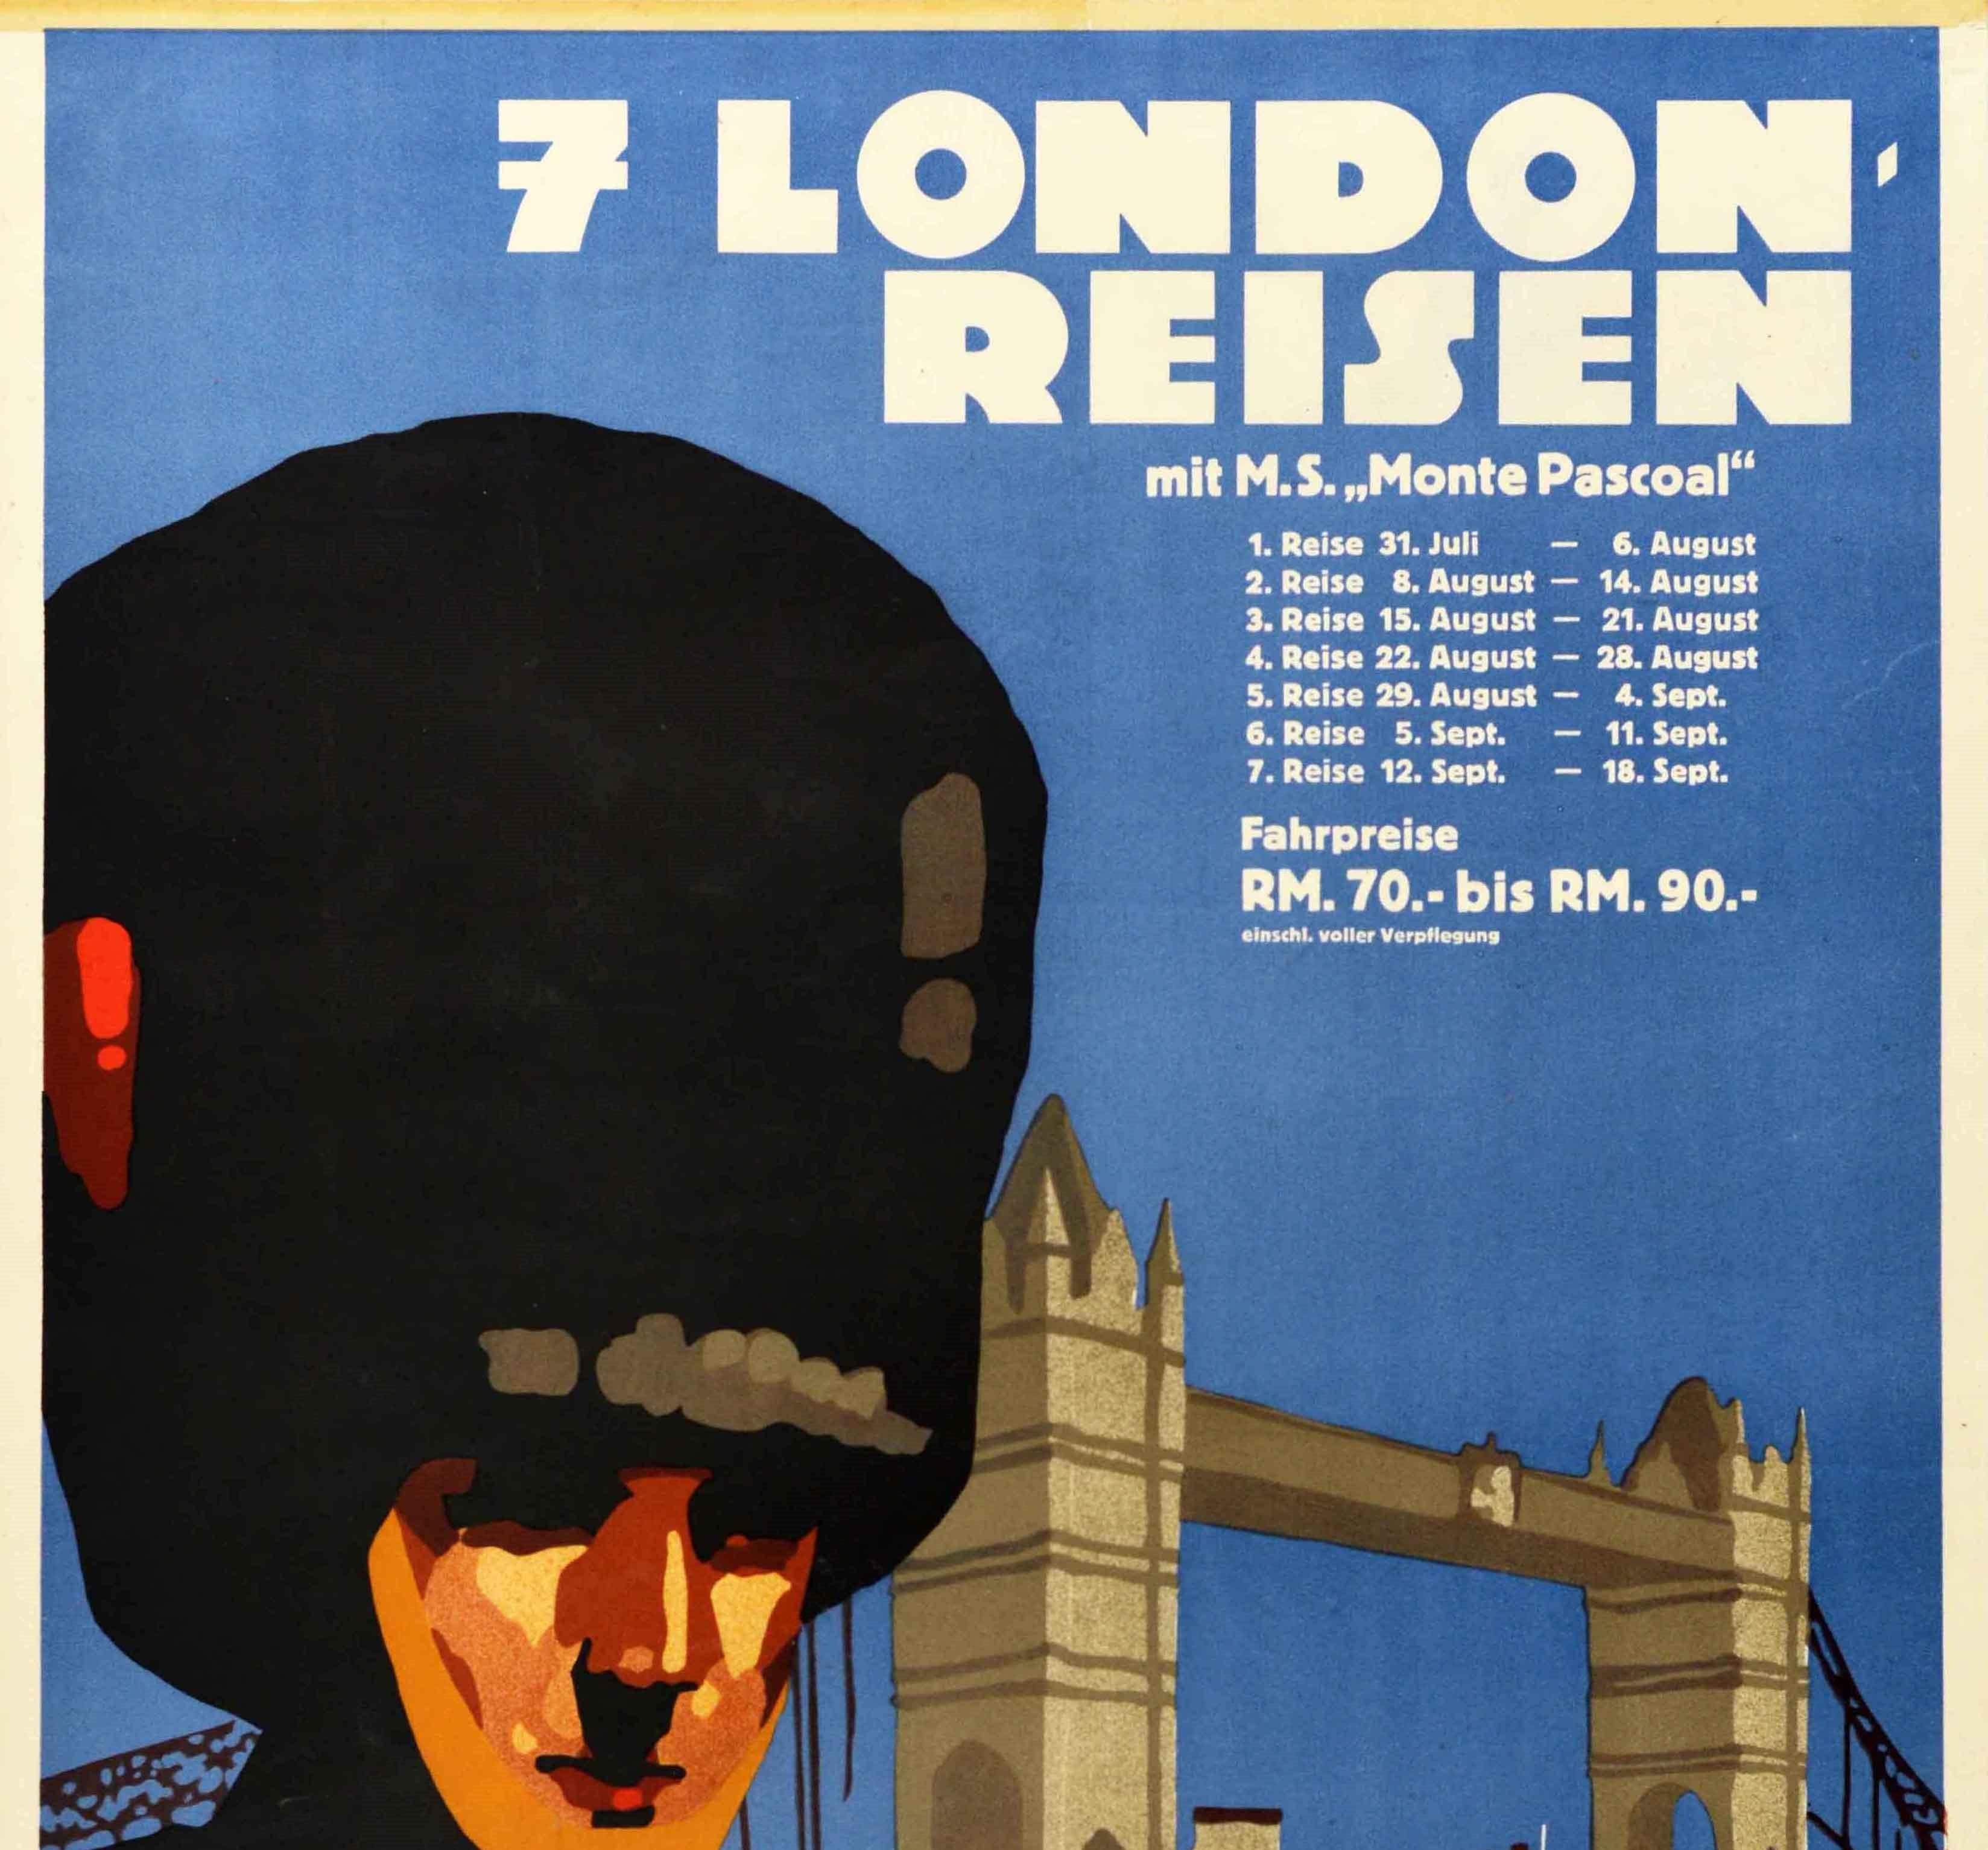 Original Vintage Cruise Travel Poster London Ft. Royal Guard Tower Bridge Thames - Print by Ottomar Anton